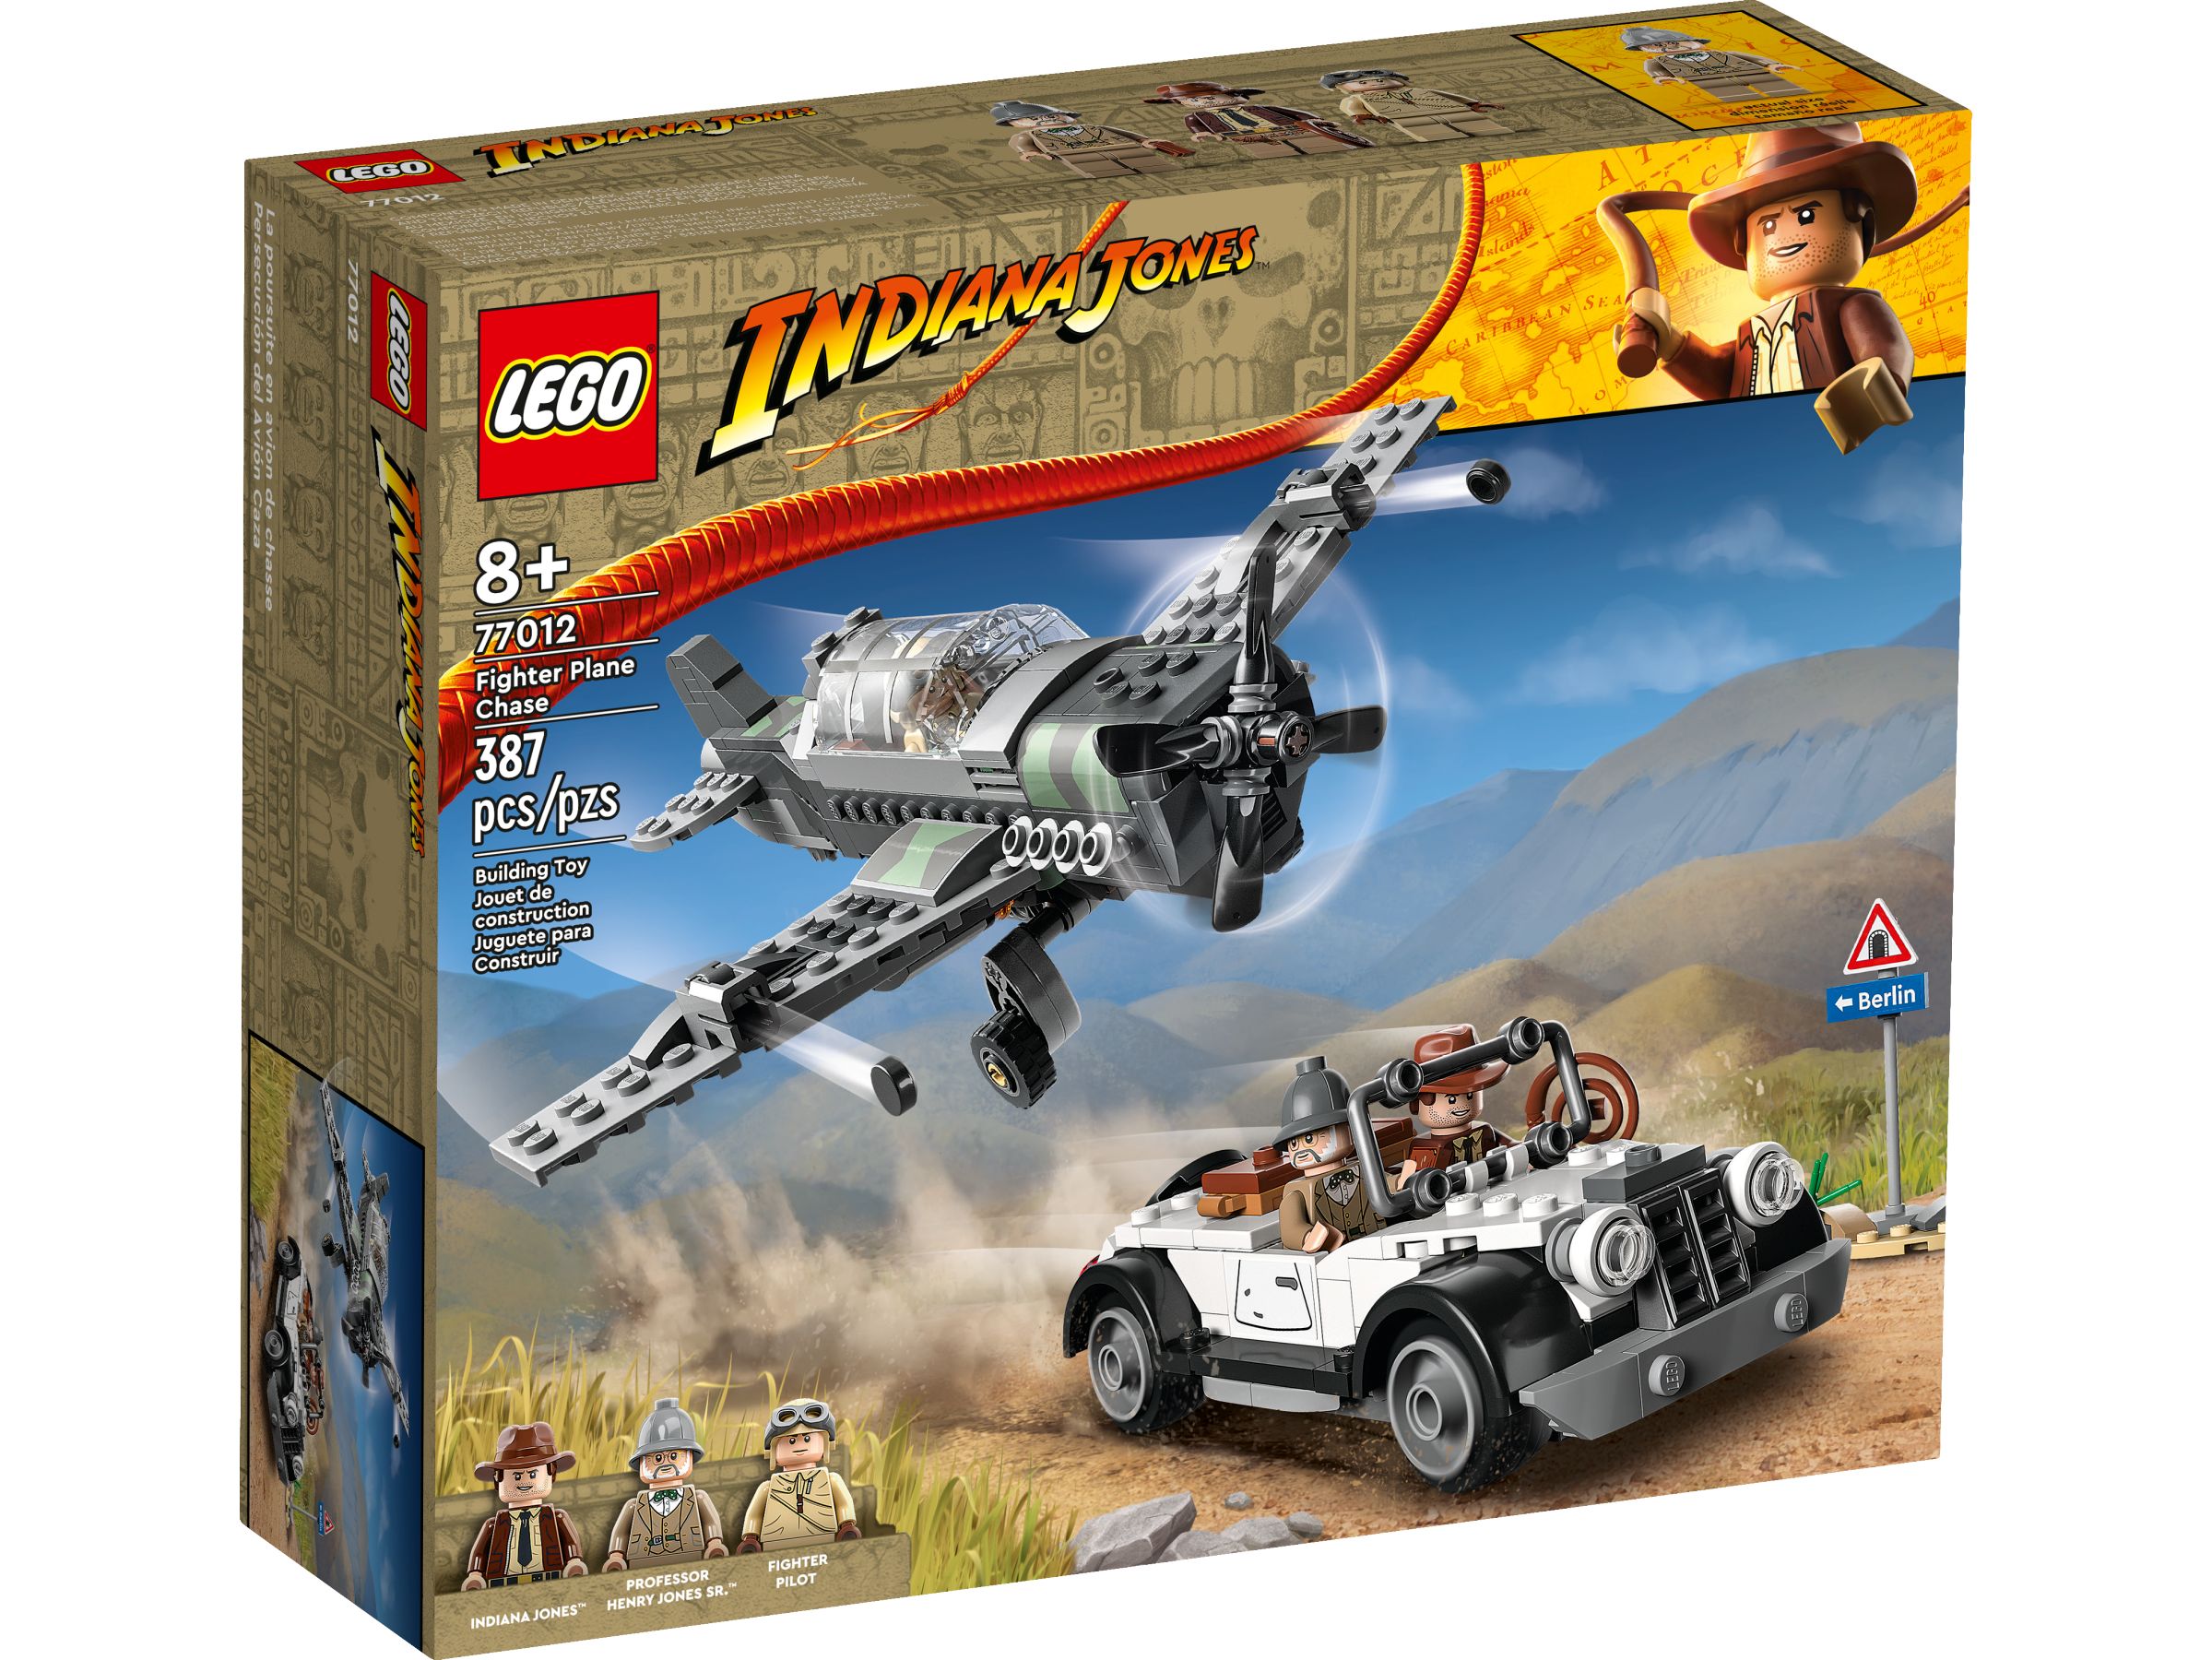 LEGO Indiana Jones 77012 Flucht vor dem Jagdflugzeug LEGO_77012_alt1.jpg